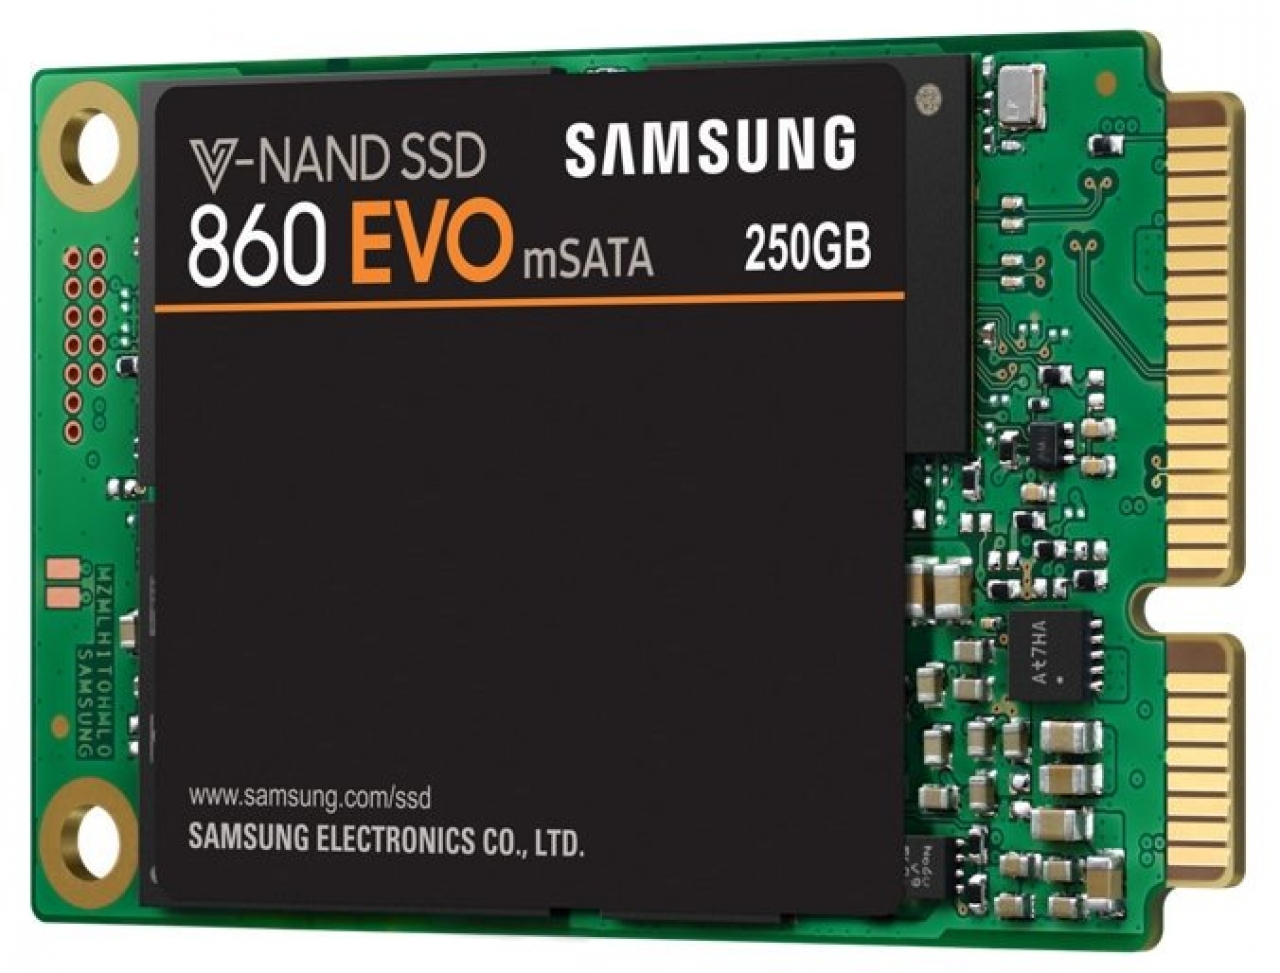 Samsung V Nand Ssd 860